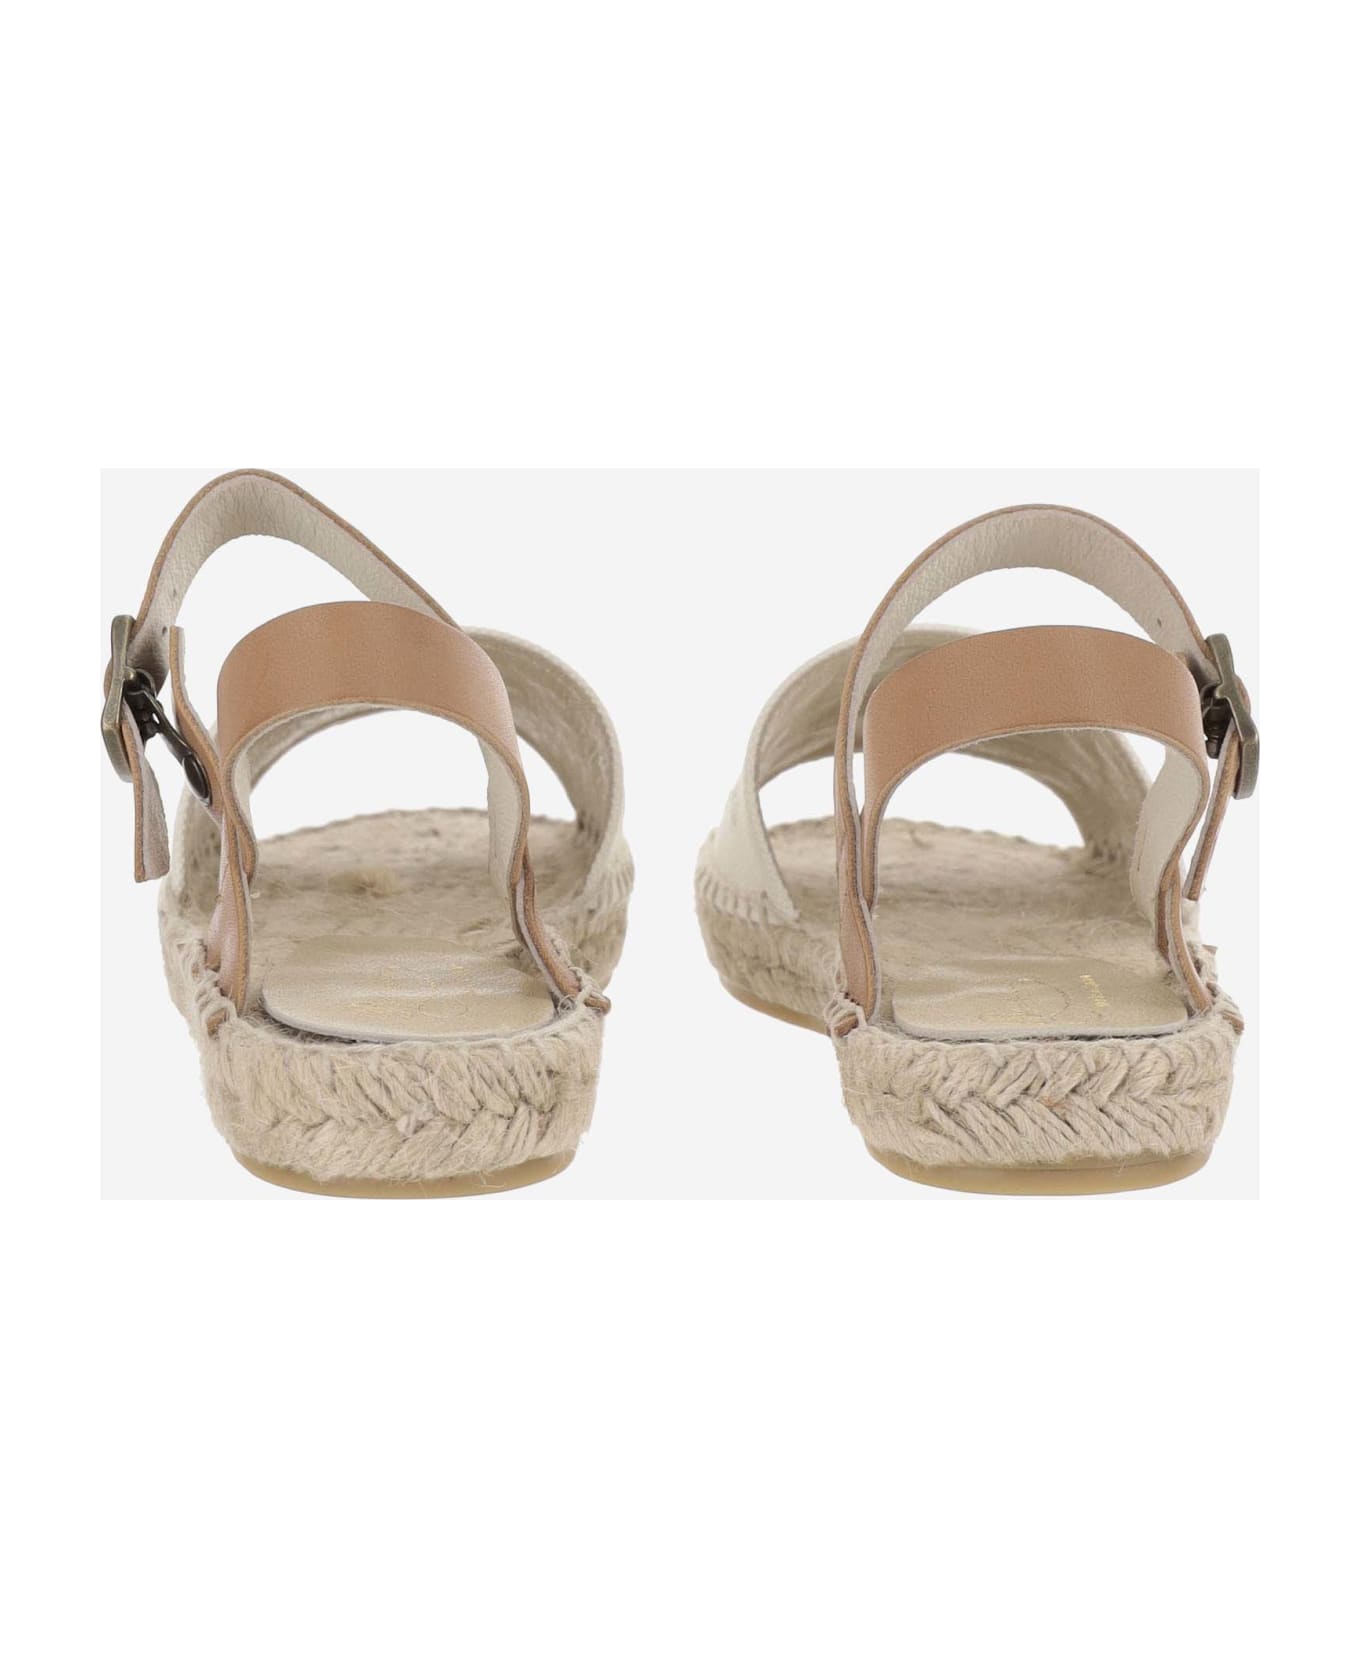 Bonpoint Fava Leather Sandals - White